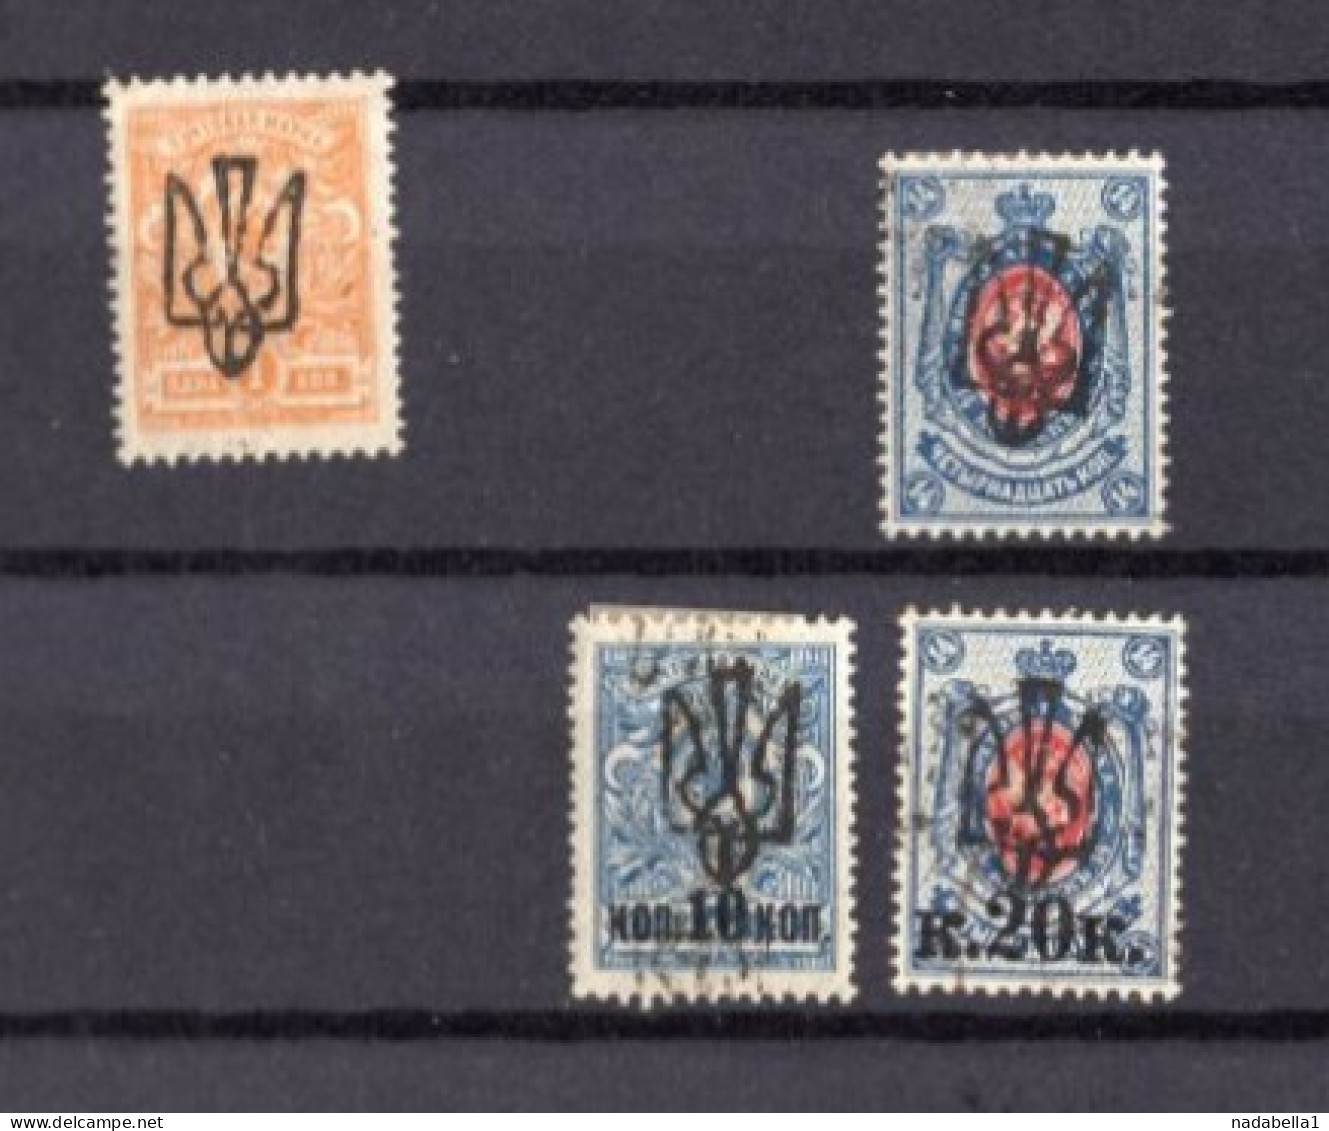 1918-1923. RUSSIA,UKRAINE,OVERPRINT,ODESSA REGIONAL ISSUE,4 POSTAL STAMPS,USED,MH - Neufs